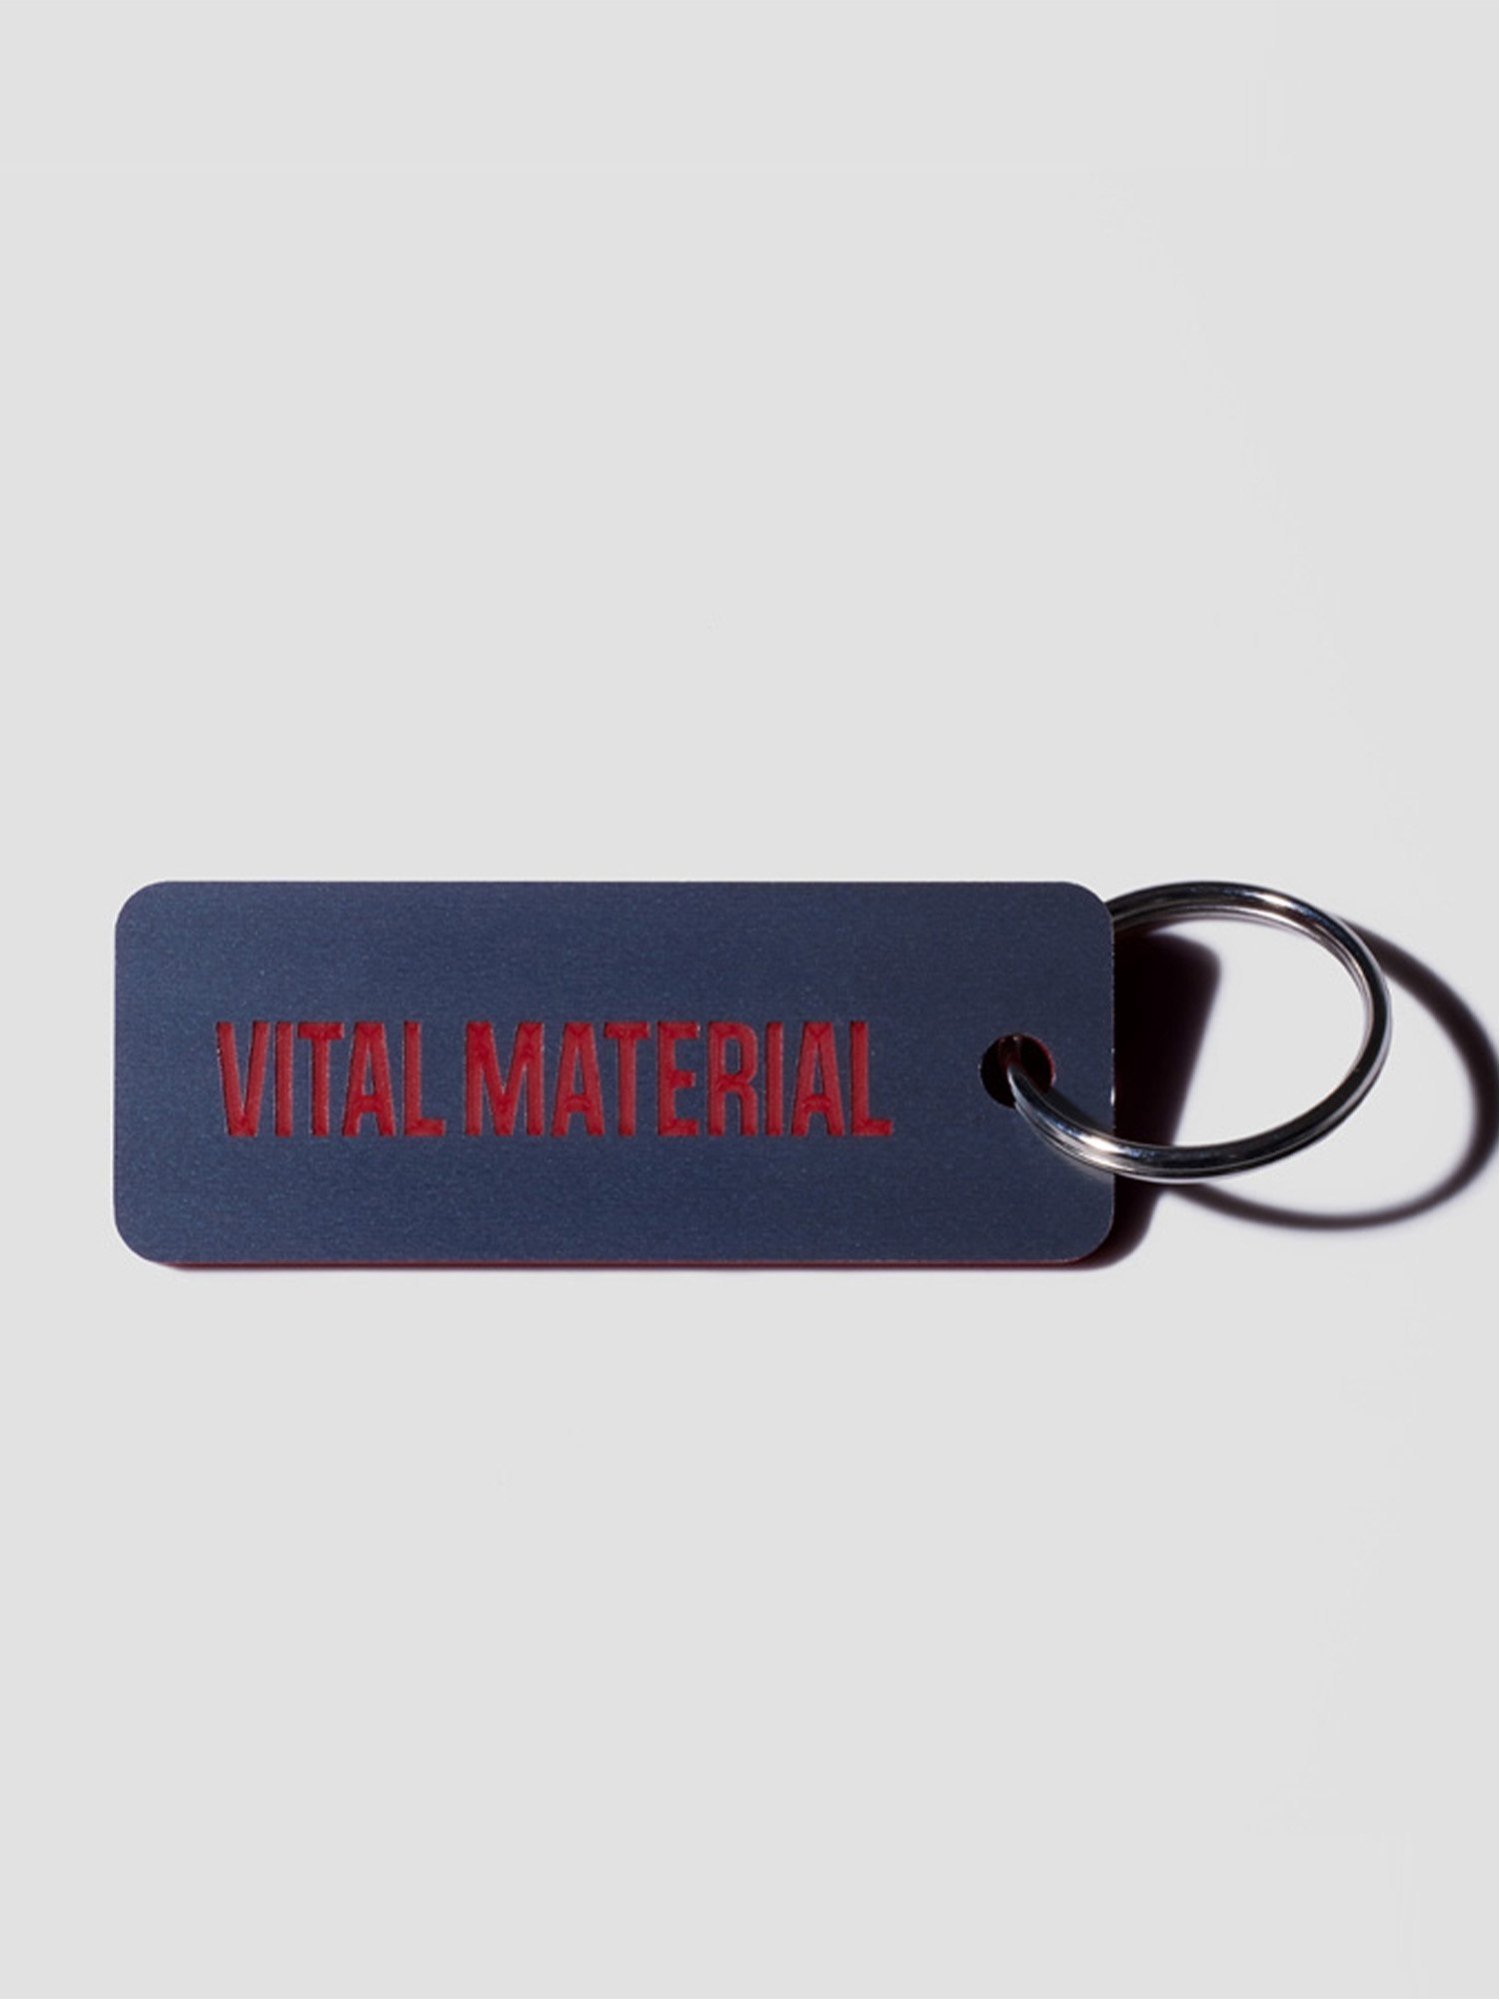 VITAL MATERIAL VITAL MATERIAL × Various Keytags BR. STAINLESS / RED ヴァイタル マテリアル ファッション雑貨 チャーム・キーチェーン ネイビー